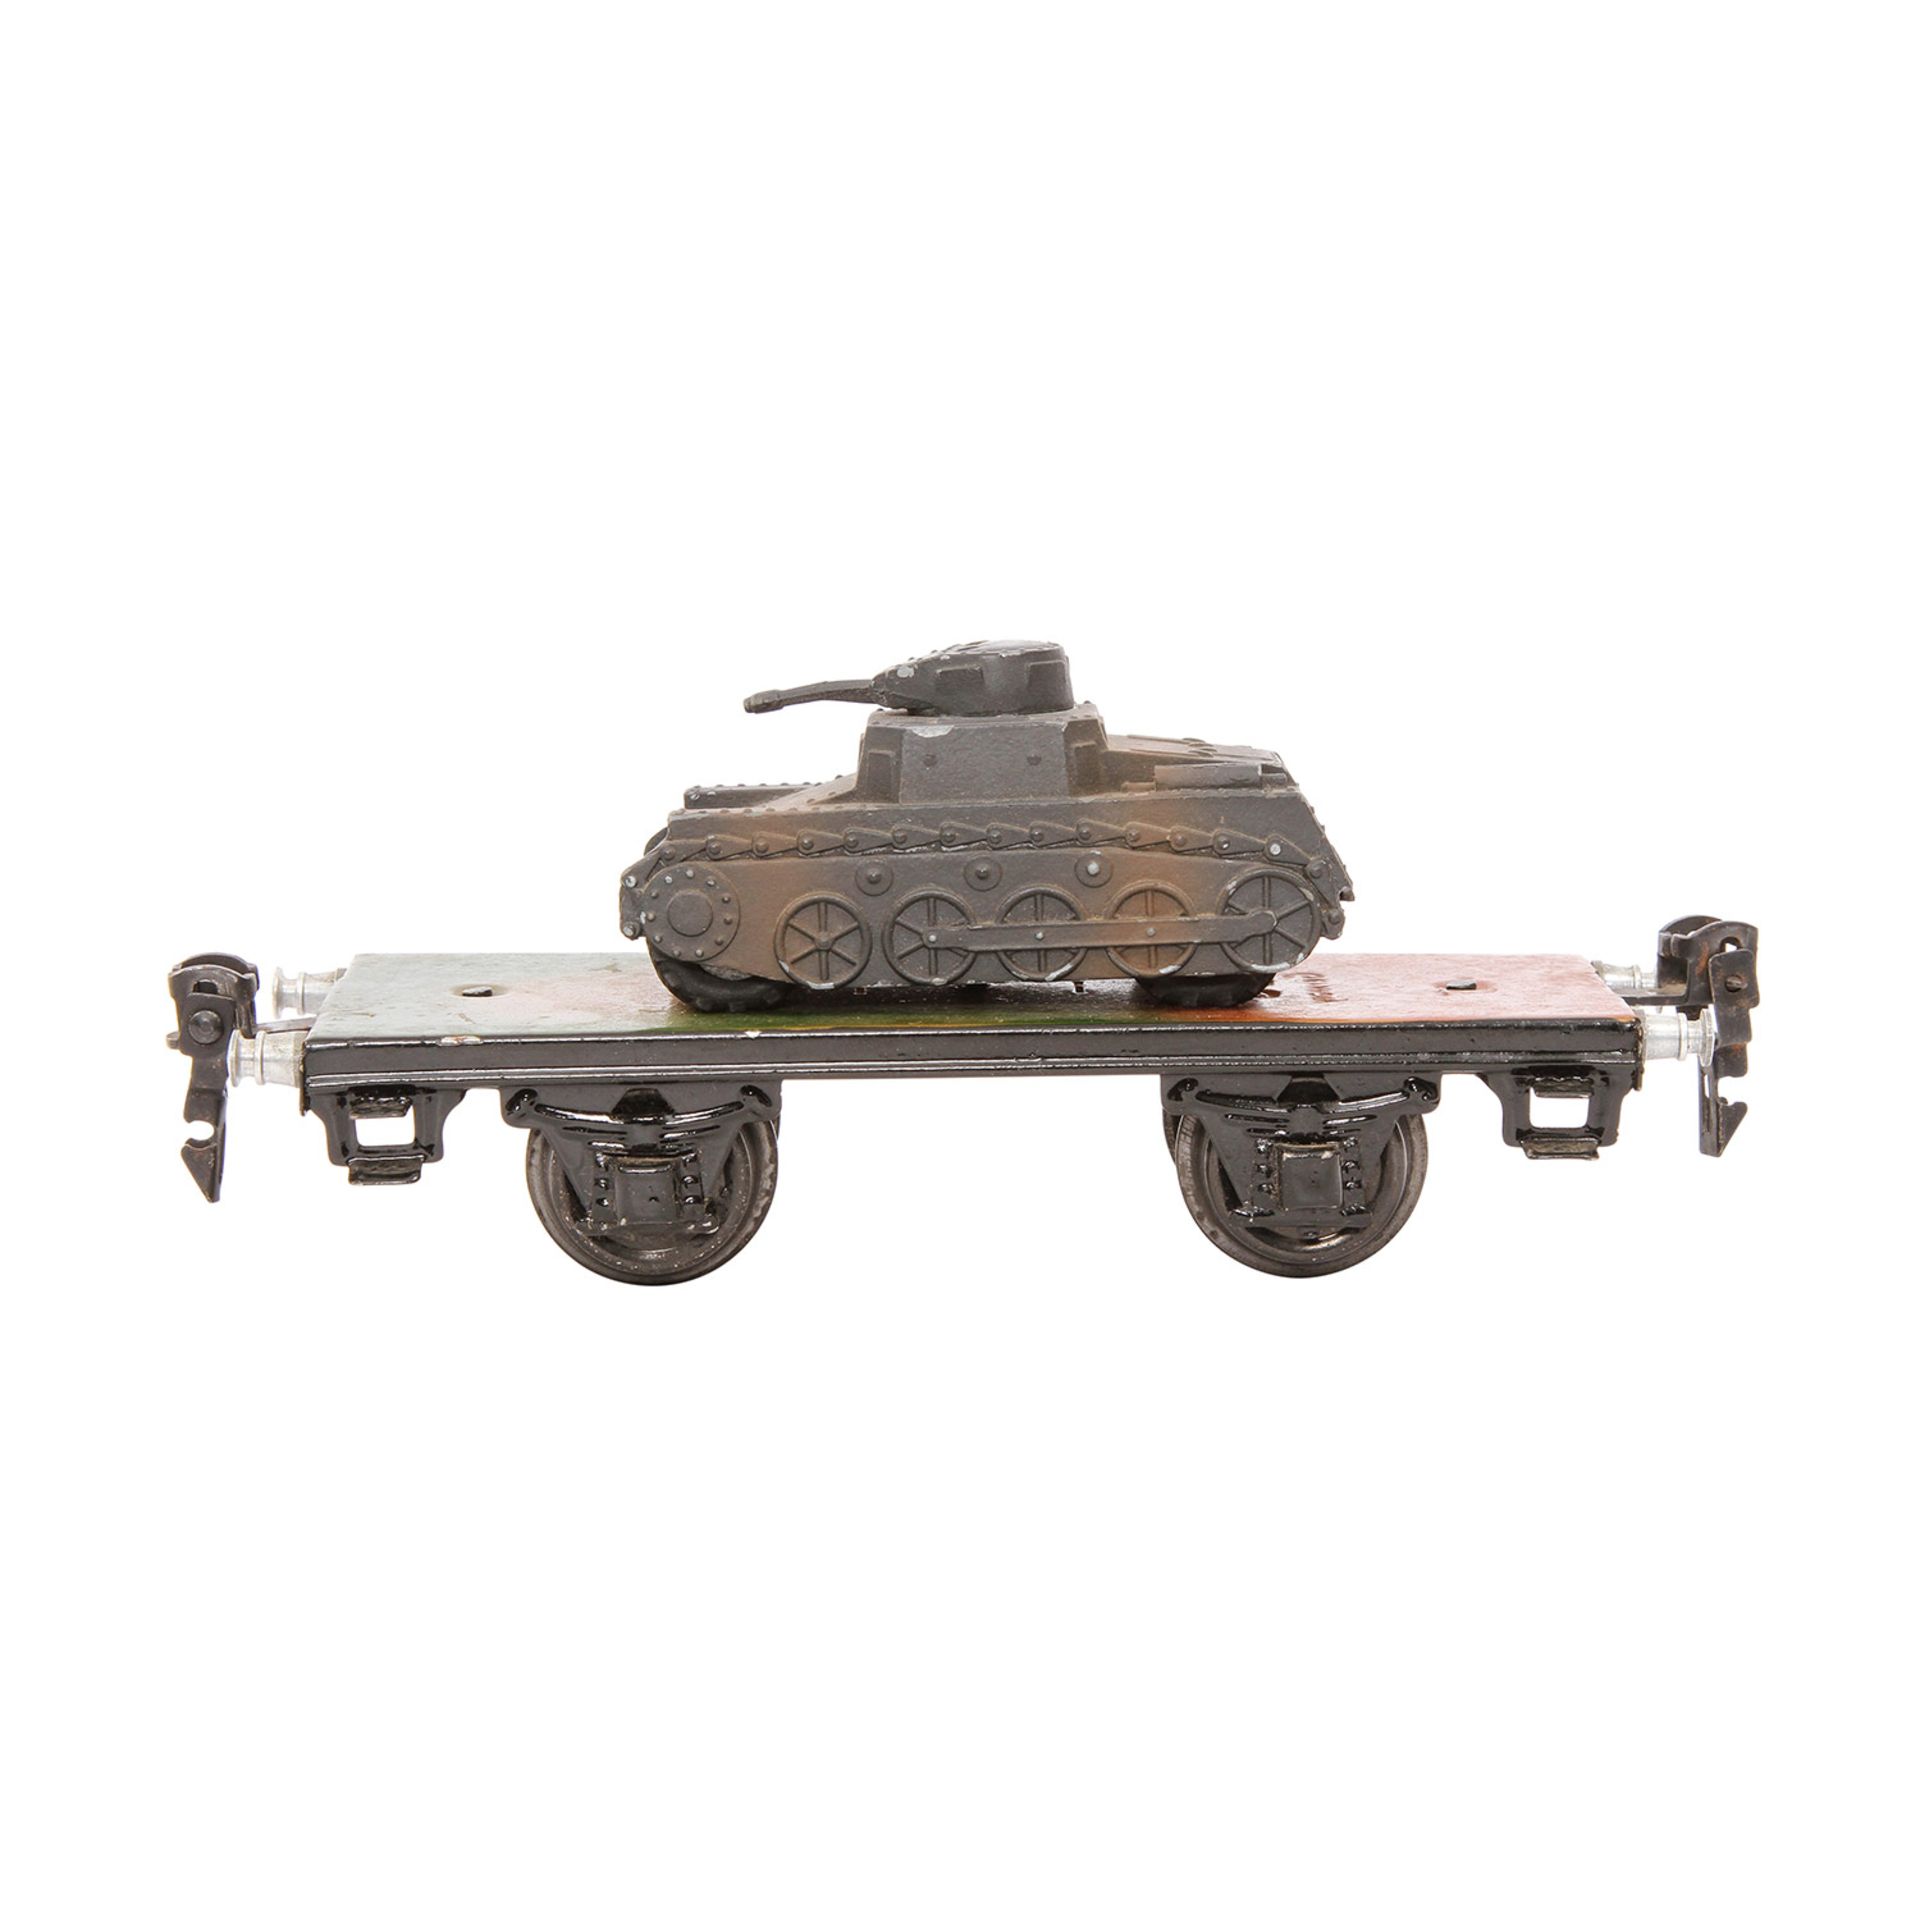 MÄRKLIN Plattformwagen mit Panzer 1770/01, Spur 0, 1939-1940, Blech, mimikry lack., 2-achsig, grauer - Image 2 of 9